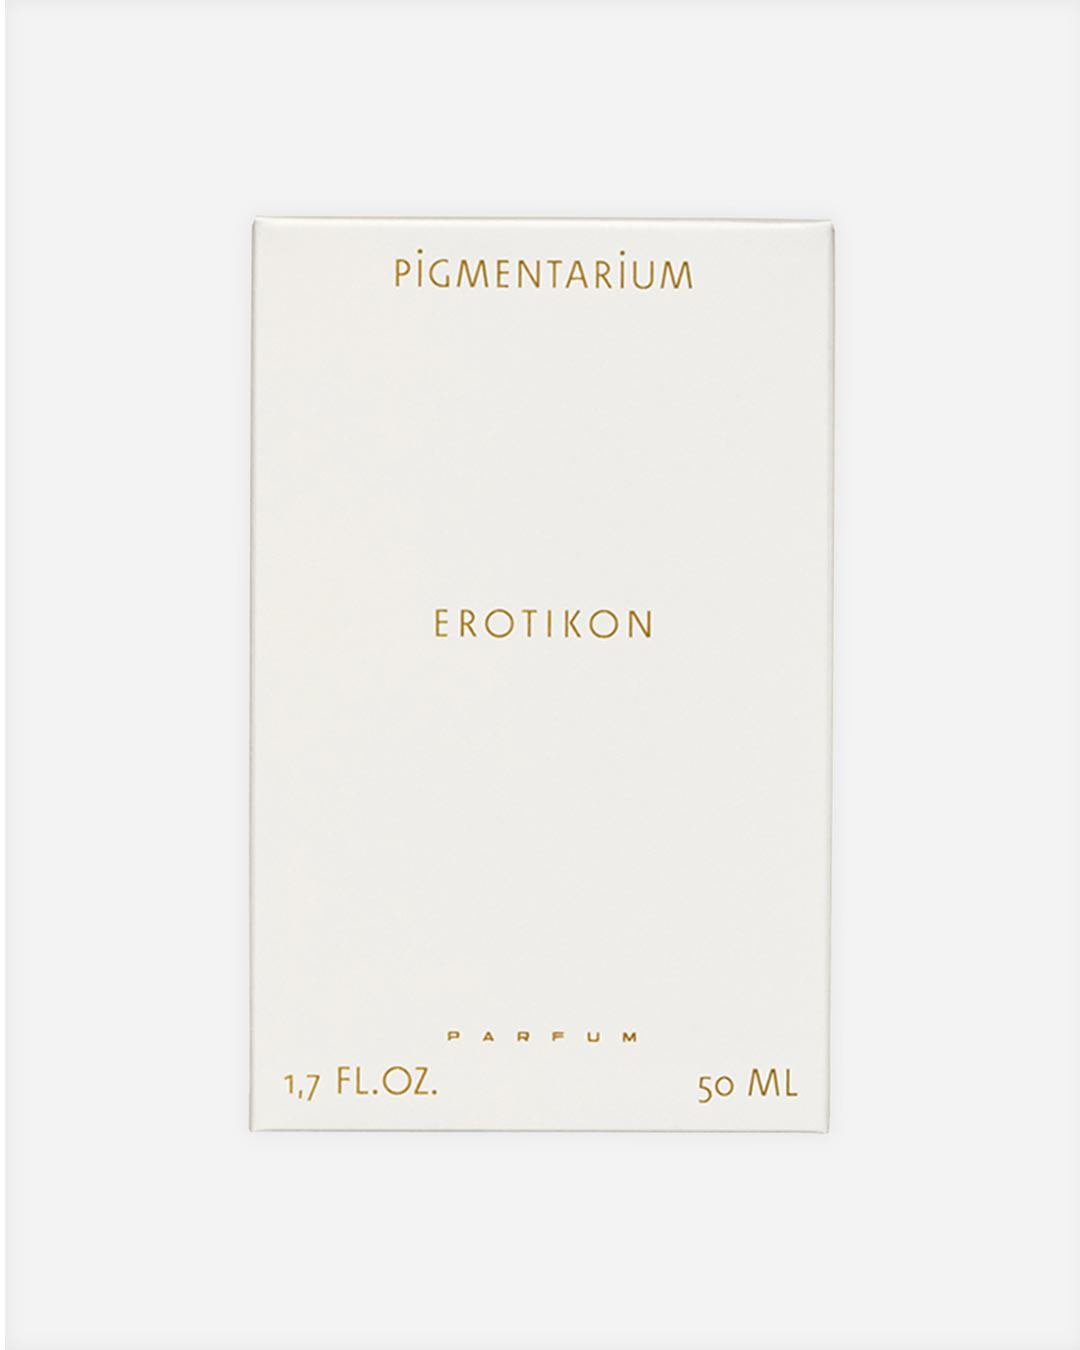 Erotikon Perfume - Fragrance - Pigmentarium - Elevastor